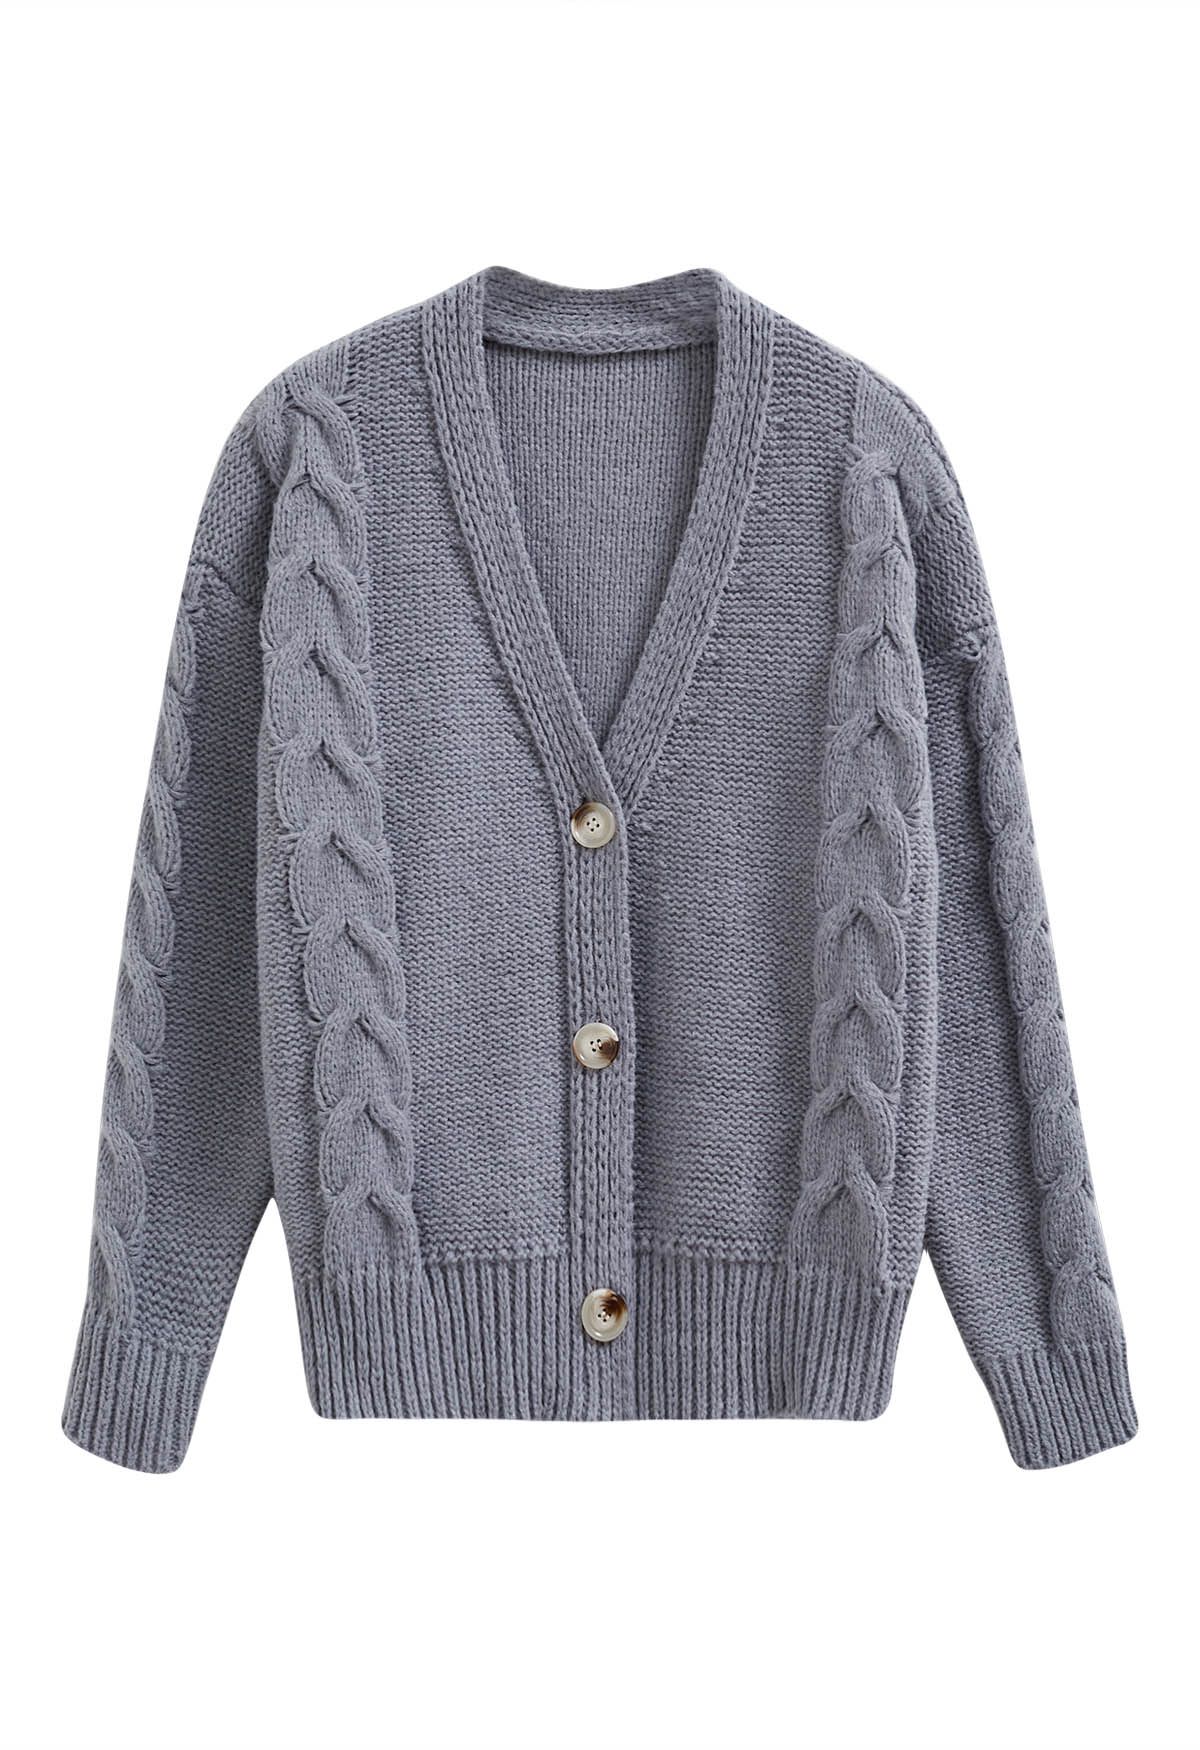 Braid Pattern Buttoned Knit Cardigan in Grey